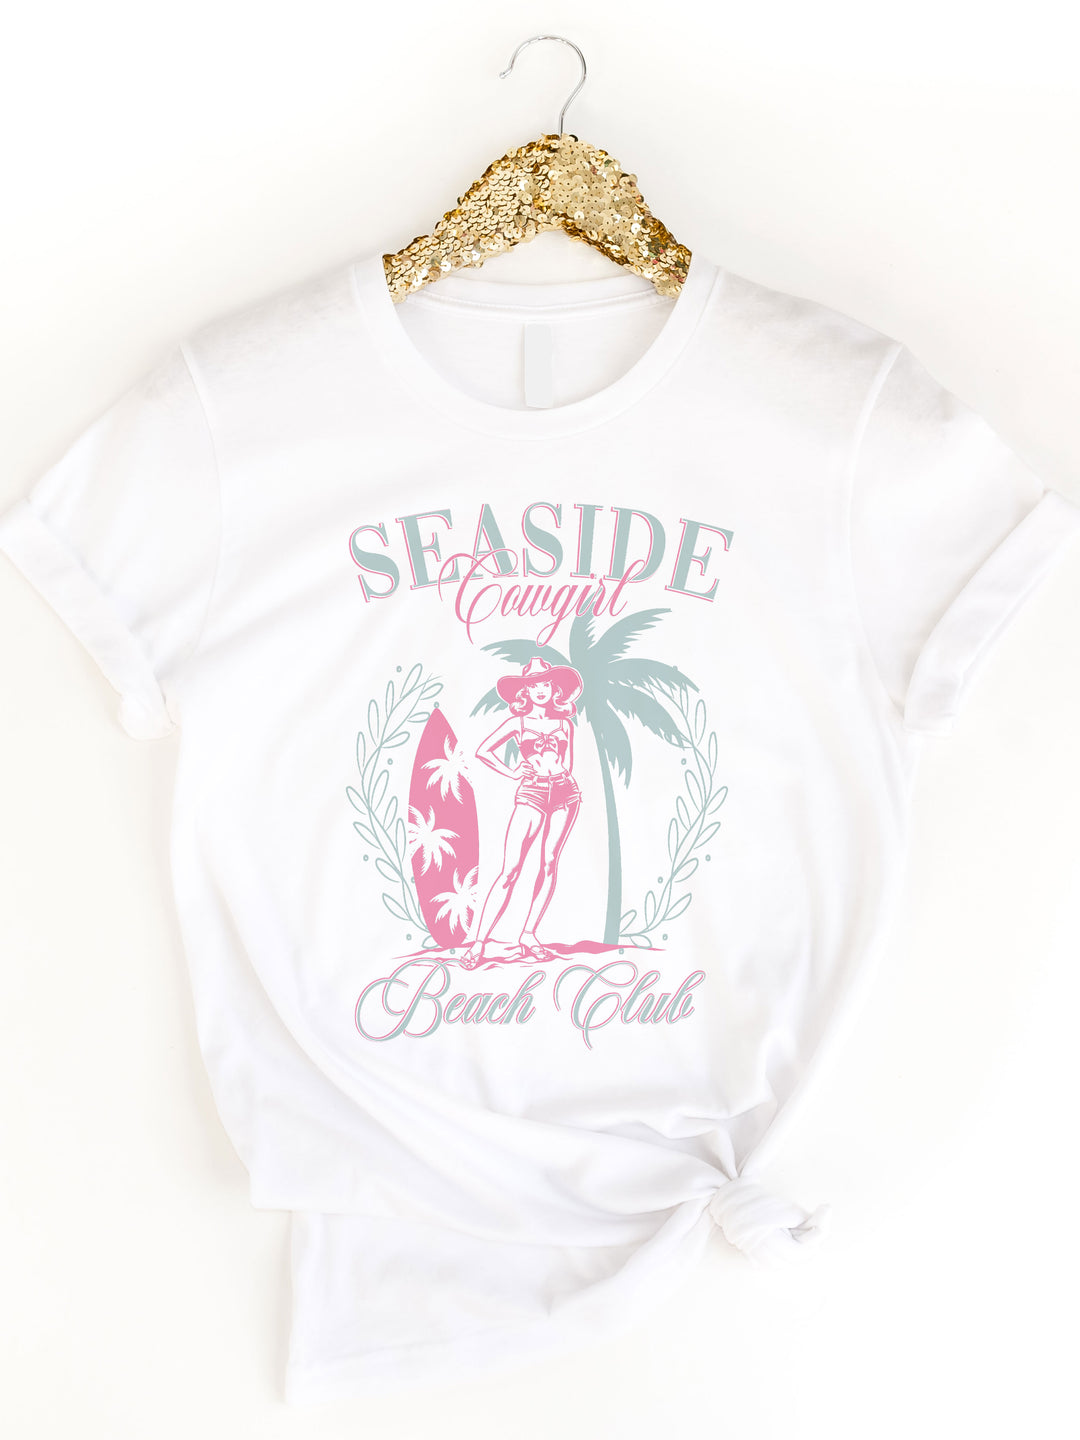 Seaside Cowgirl Beach Club Graphic Tee